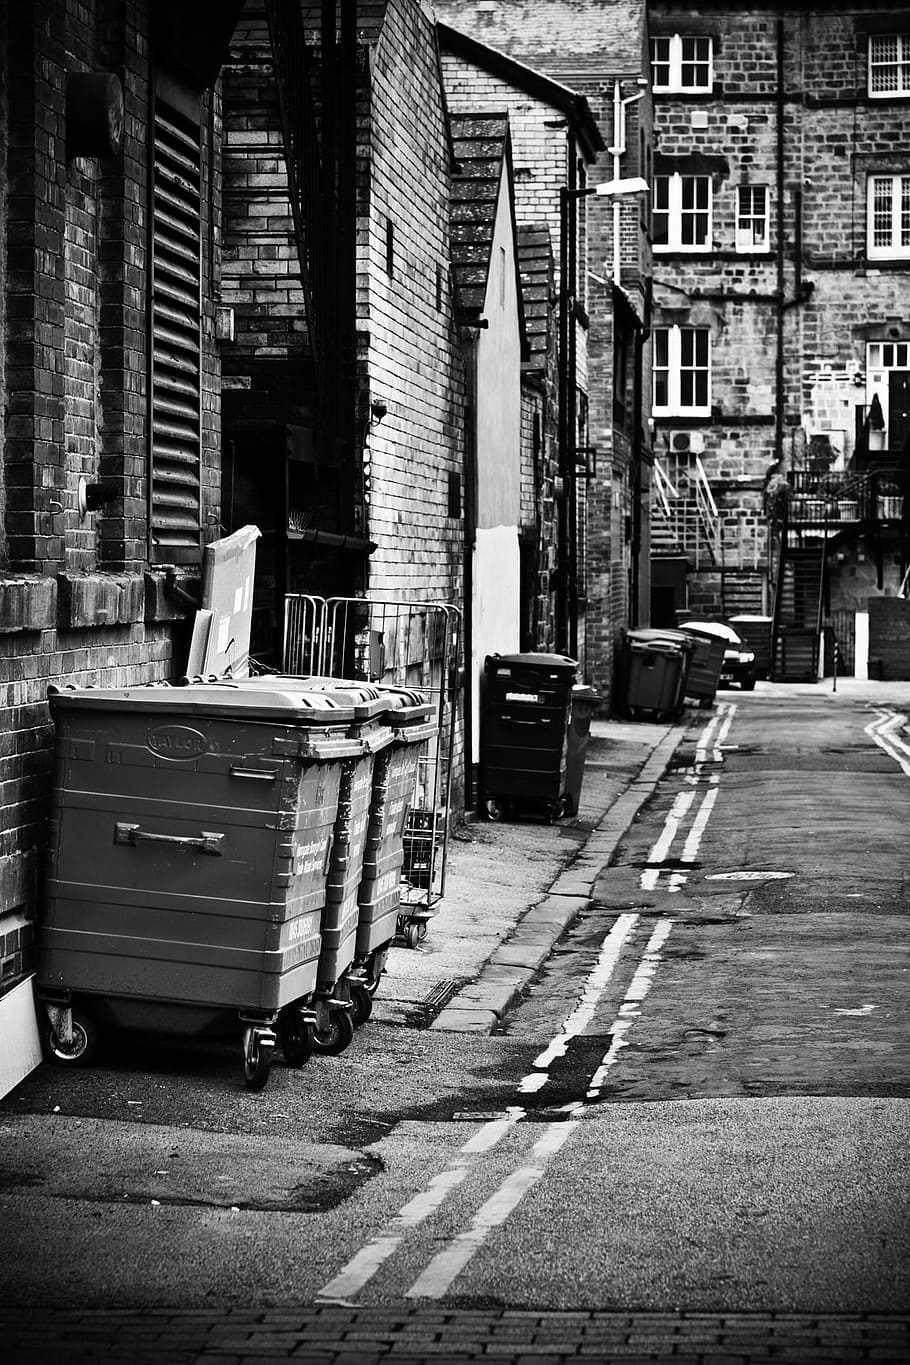 foto en escala de grises, cubo de basura, detrás, edificios, callejón, ciudad, crimen, callejón trasero, contenedor, peligroso